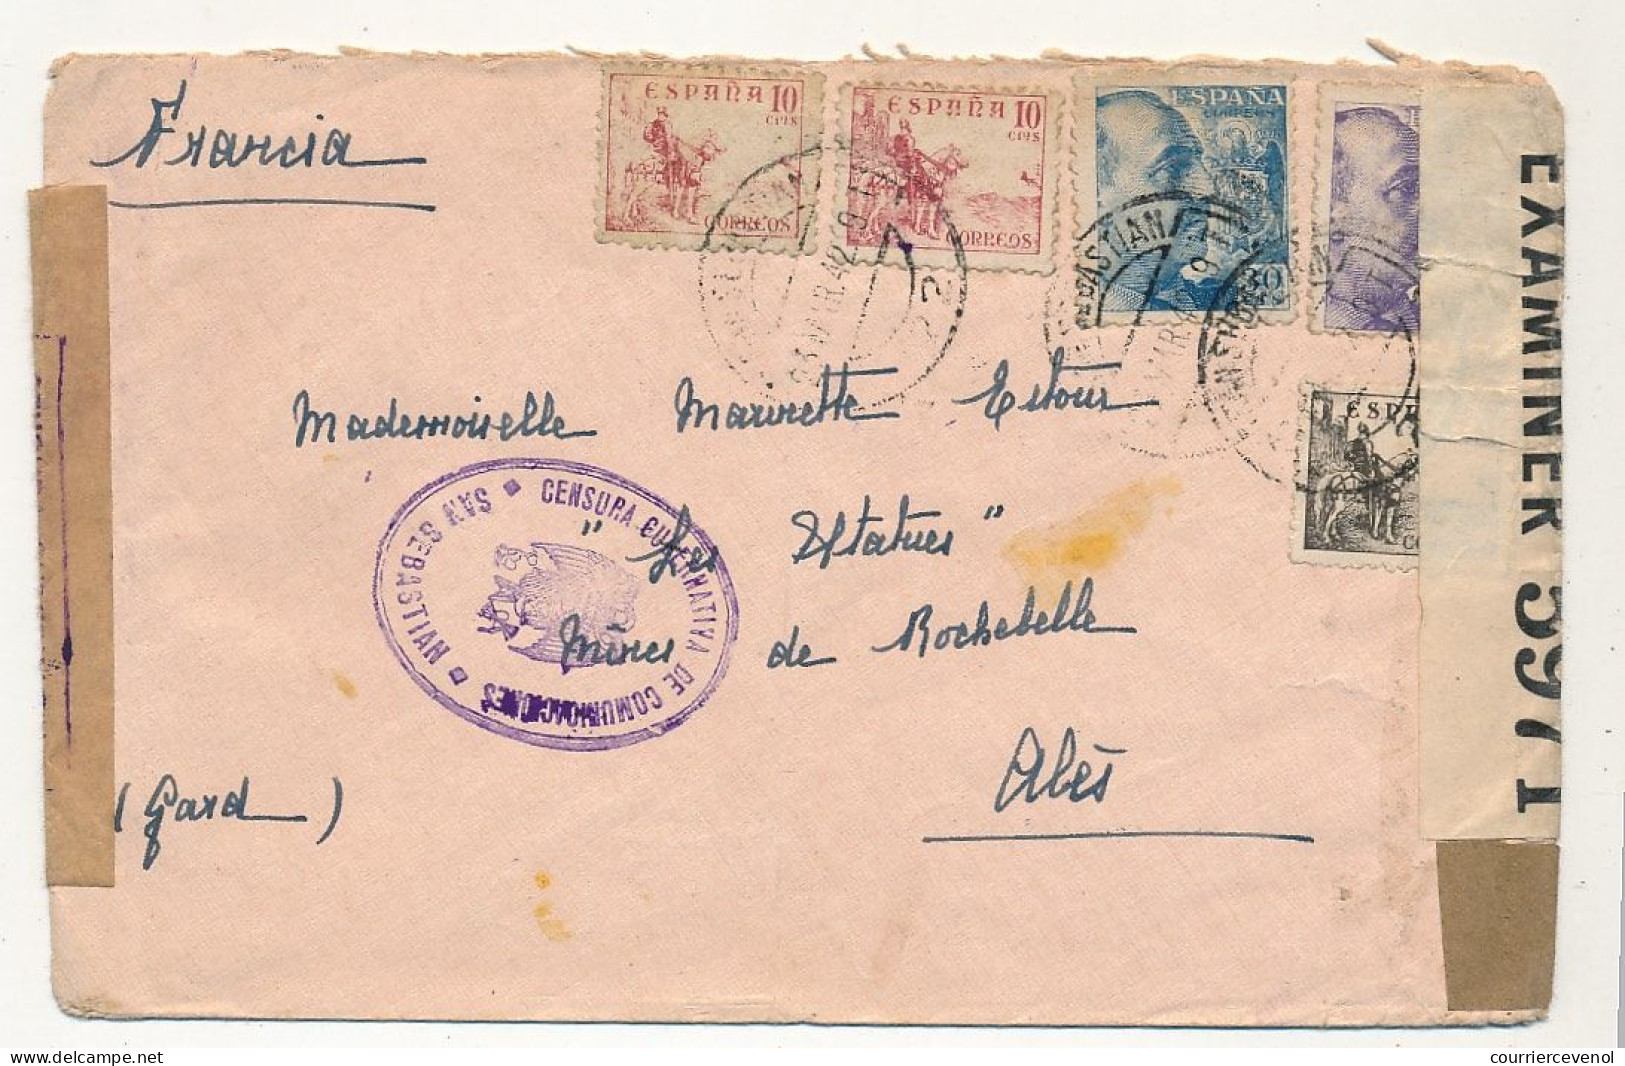 Enveloppe 1942 - Double Censure "Censura Gubernativa De Communicaciones SAN SEBASTIAN" + Examiner 5971 - Brieven En Documenten